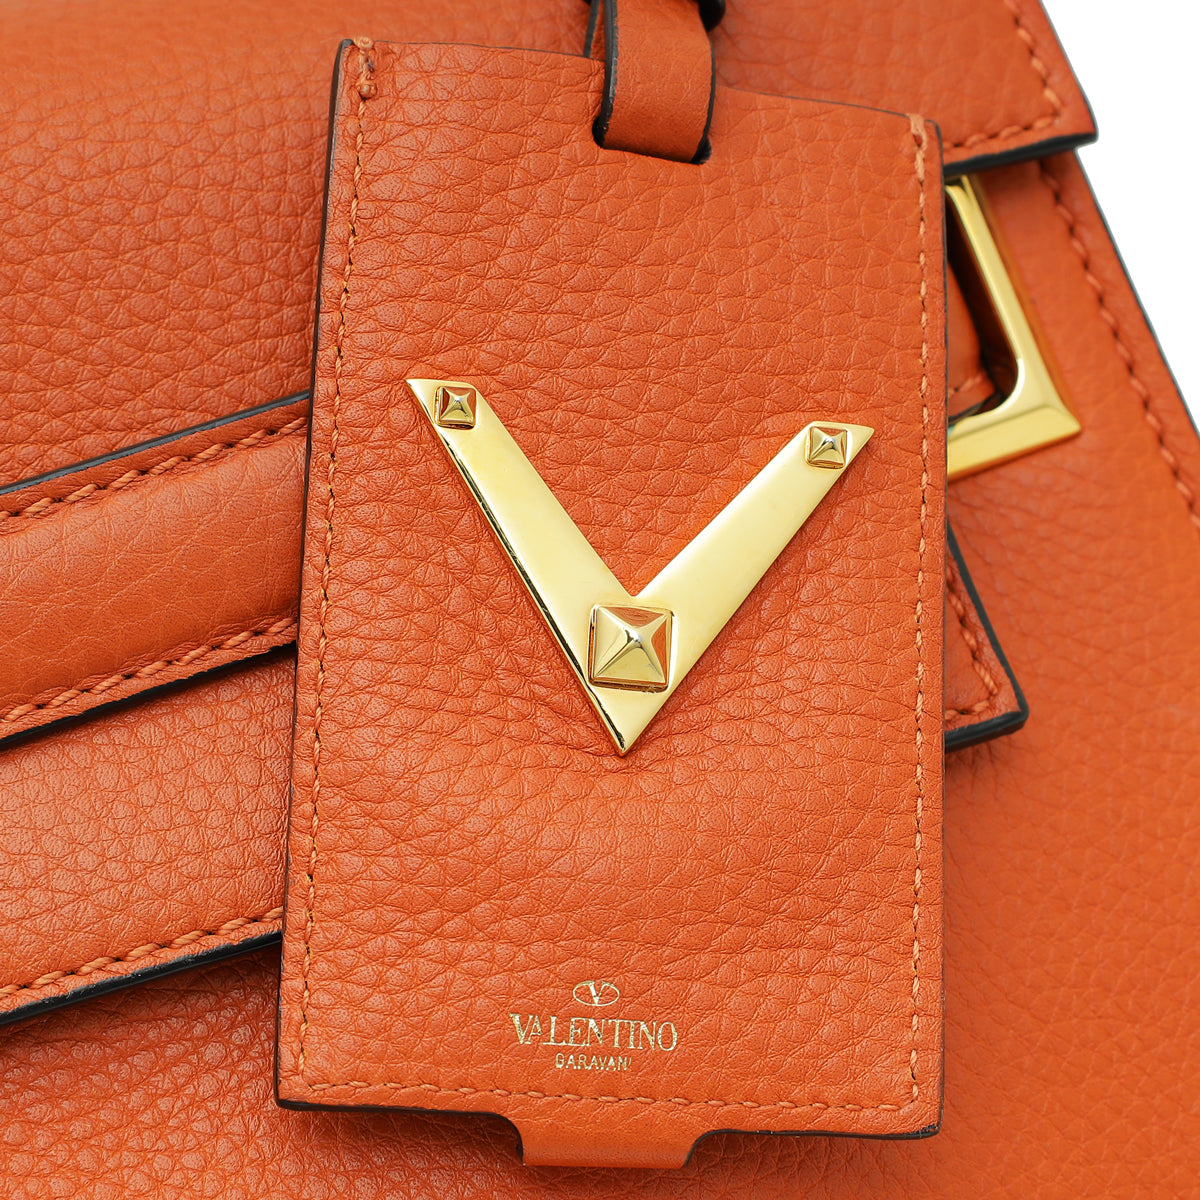 Valentino Orange Brown My Rockstud Single Handle Medium Bag